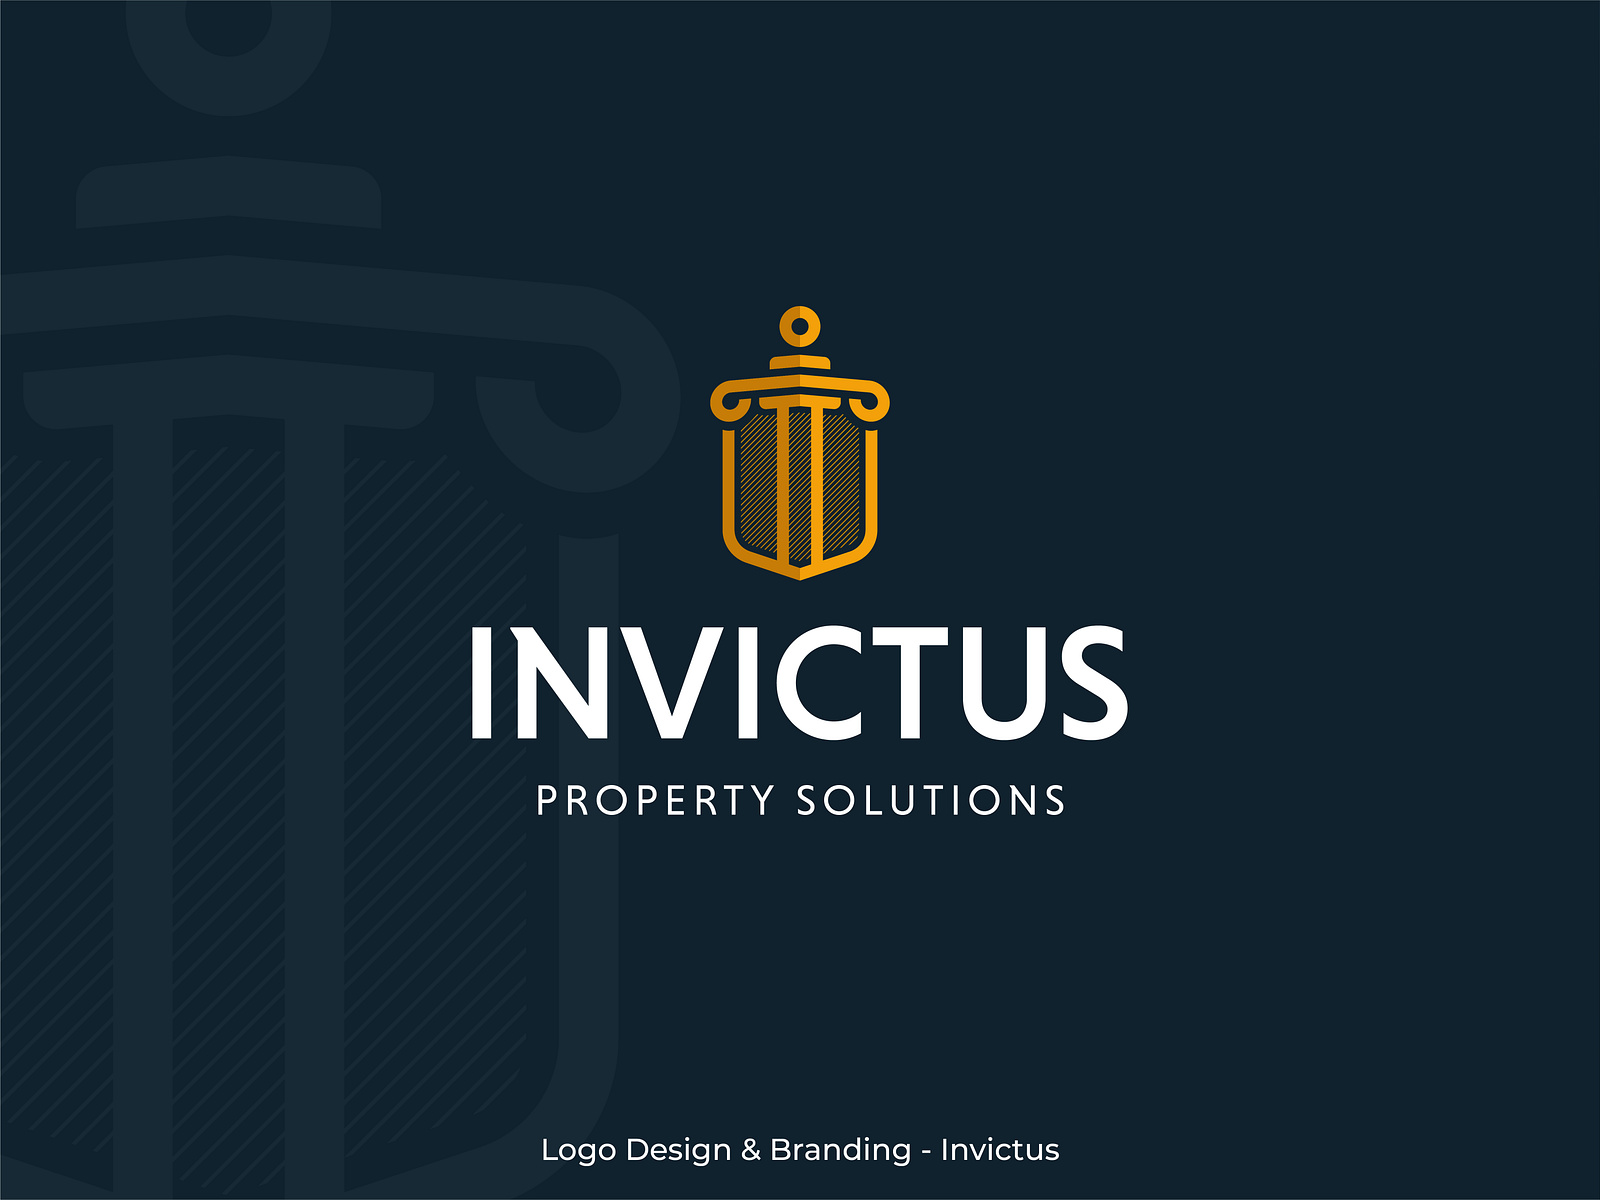 Invictus - Logo Design & Branding by Tom Green on Dribbble